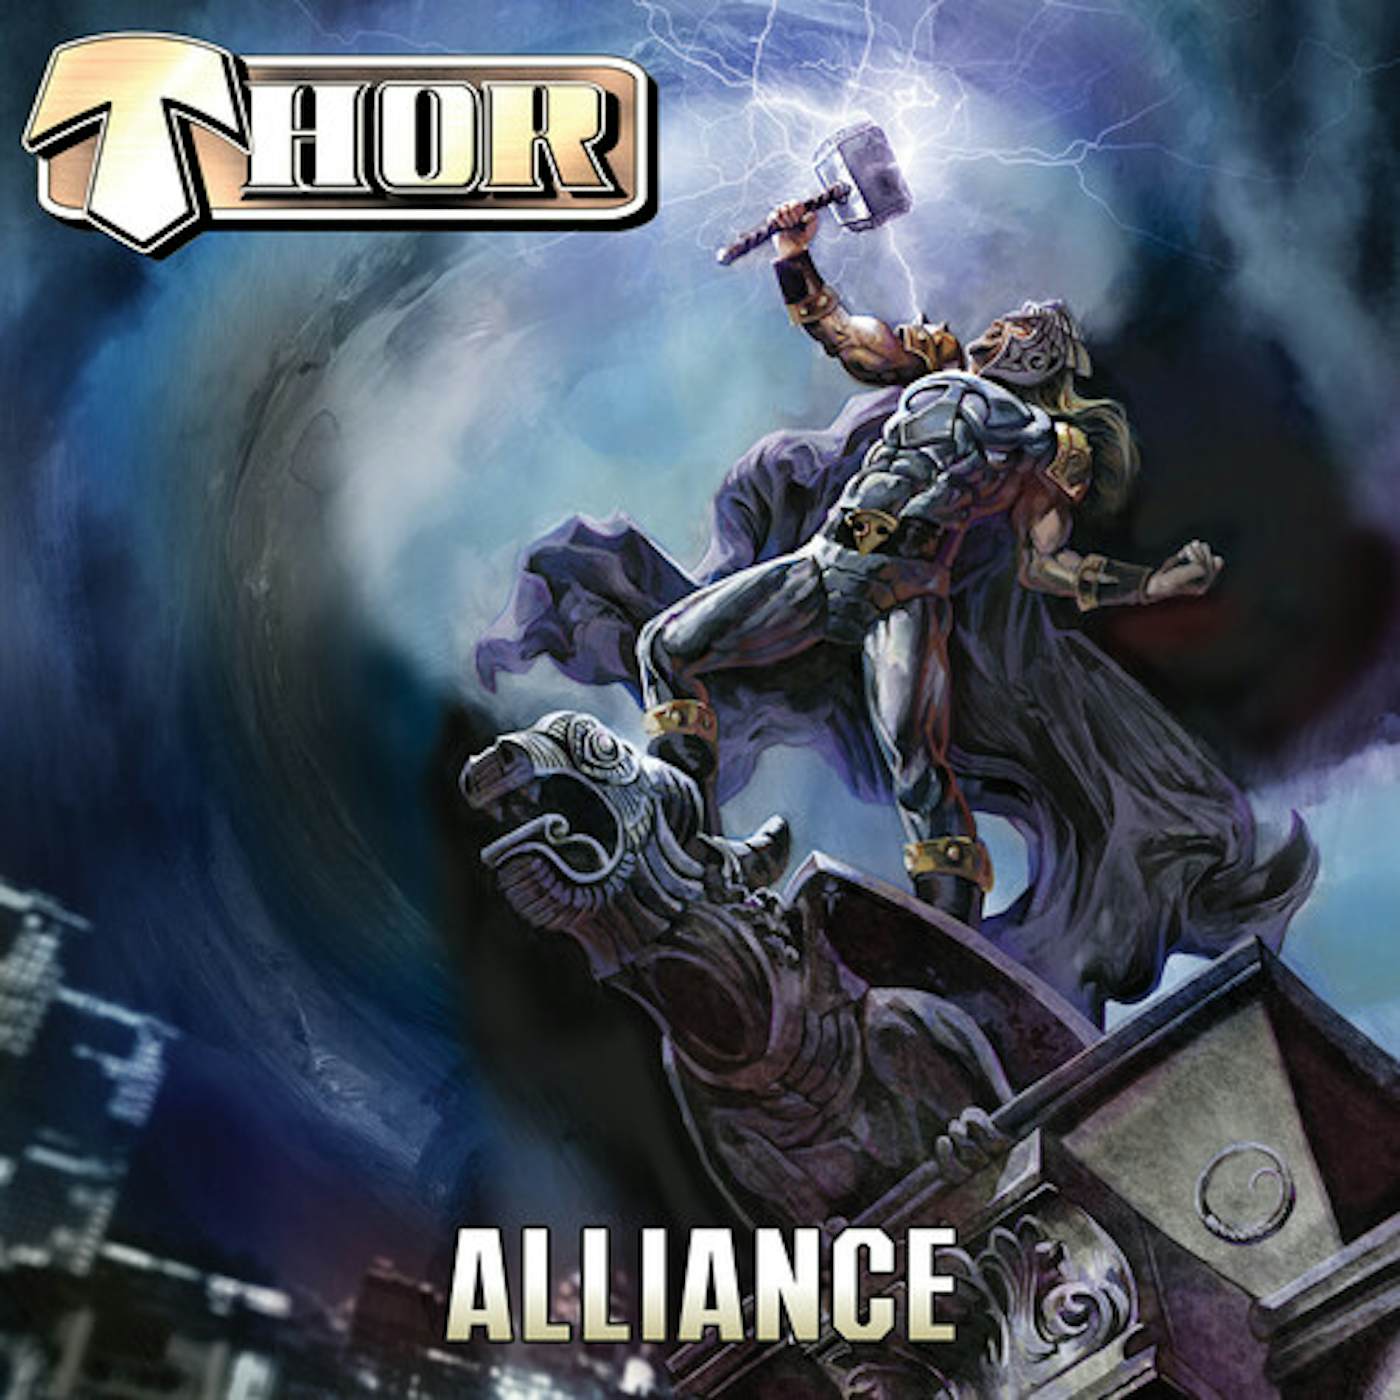 Thor ALLIANCE Vinyl Record